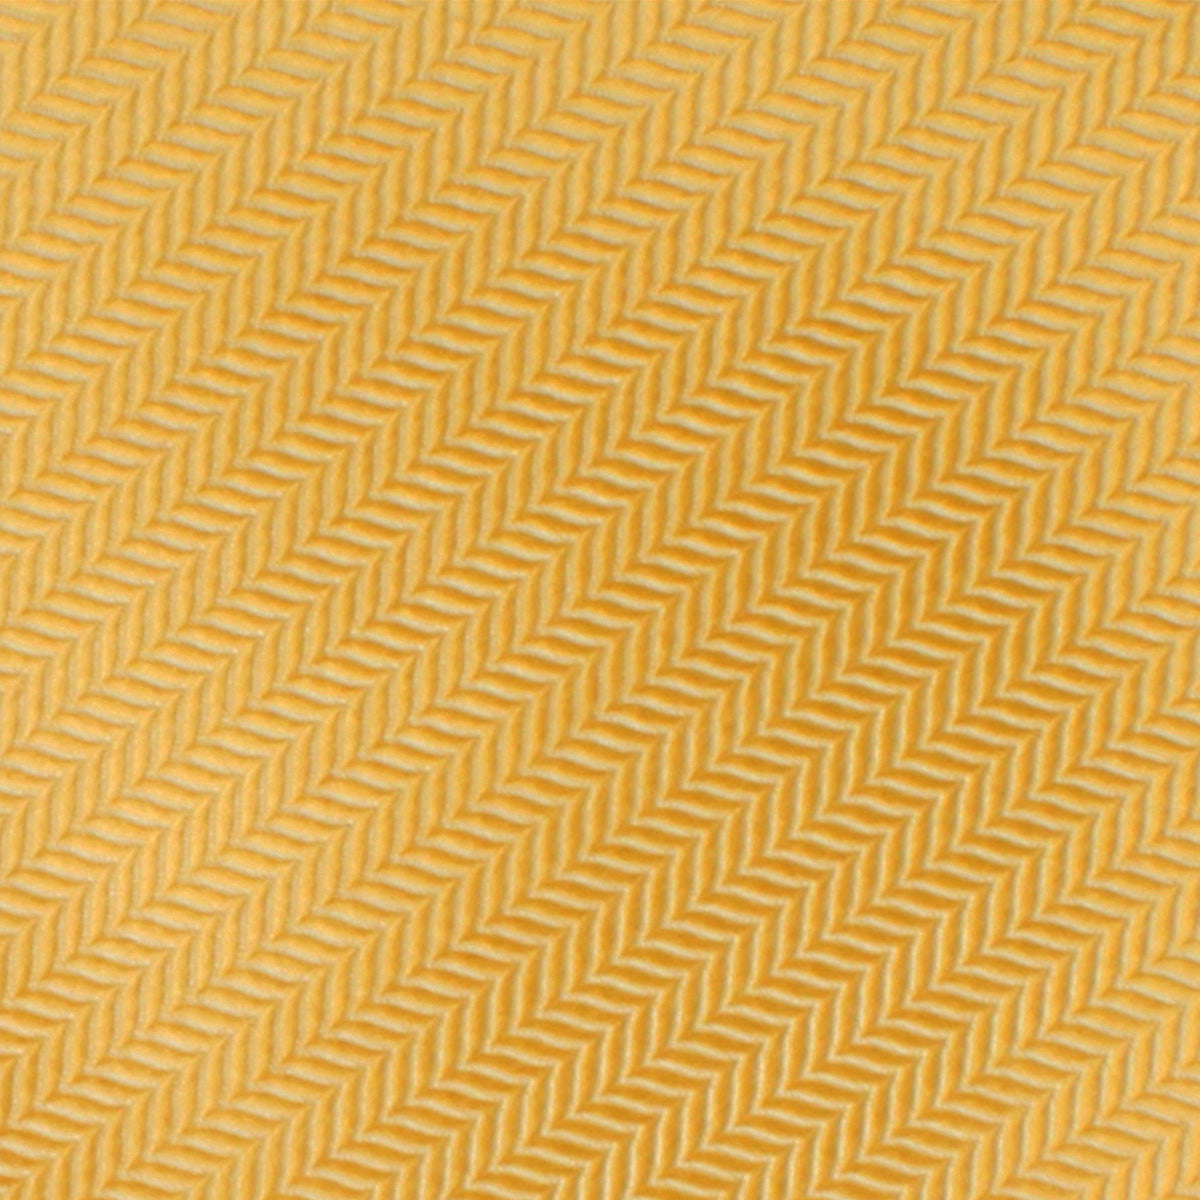 Butterscotch Yellow Herringbone Chevron Fabric Swatch